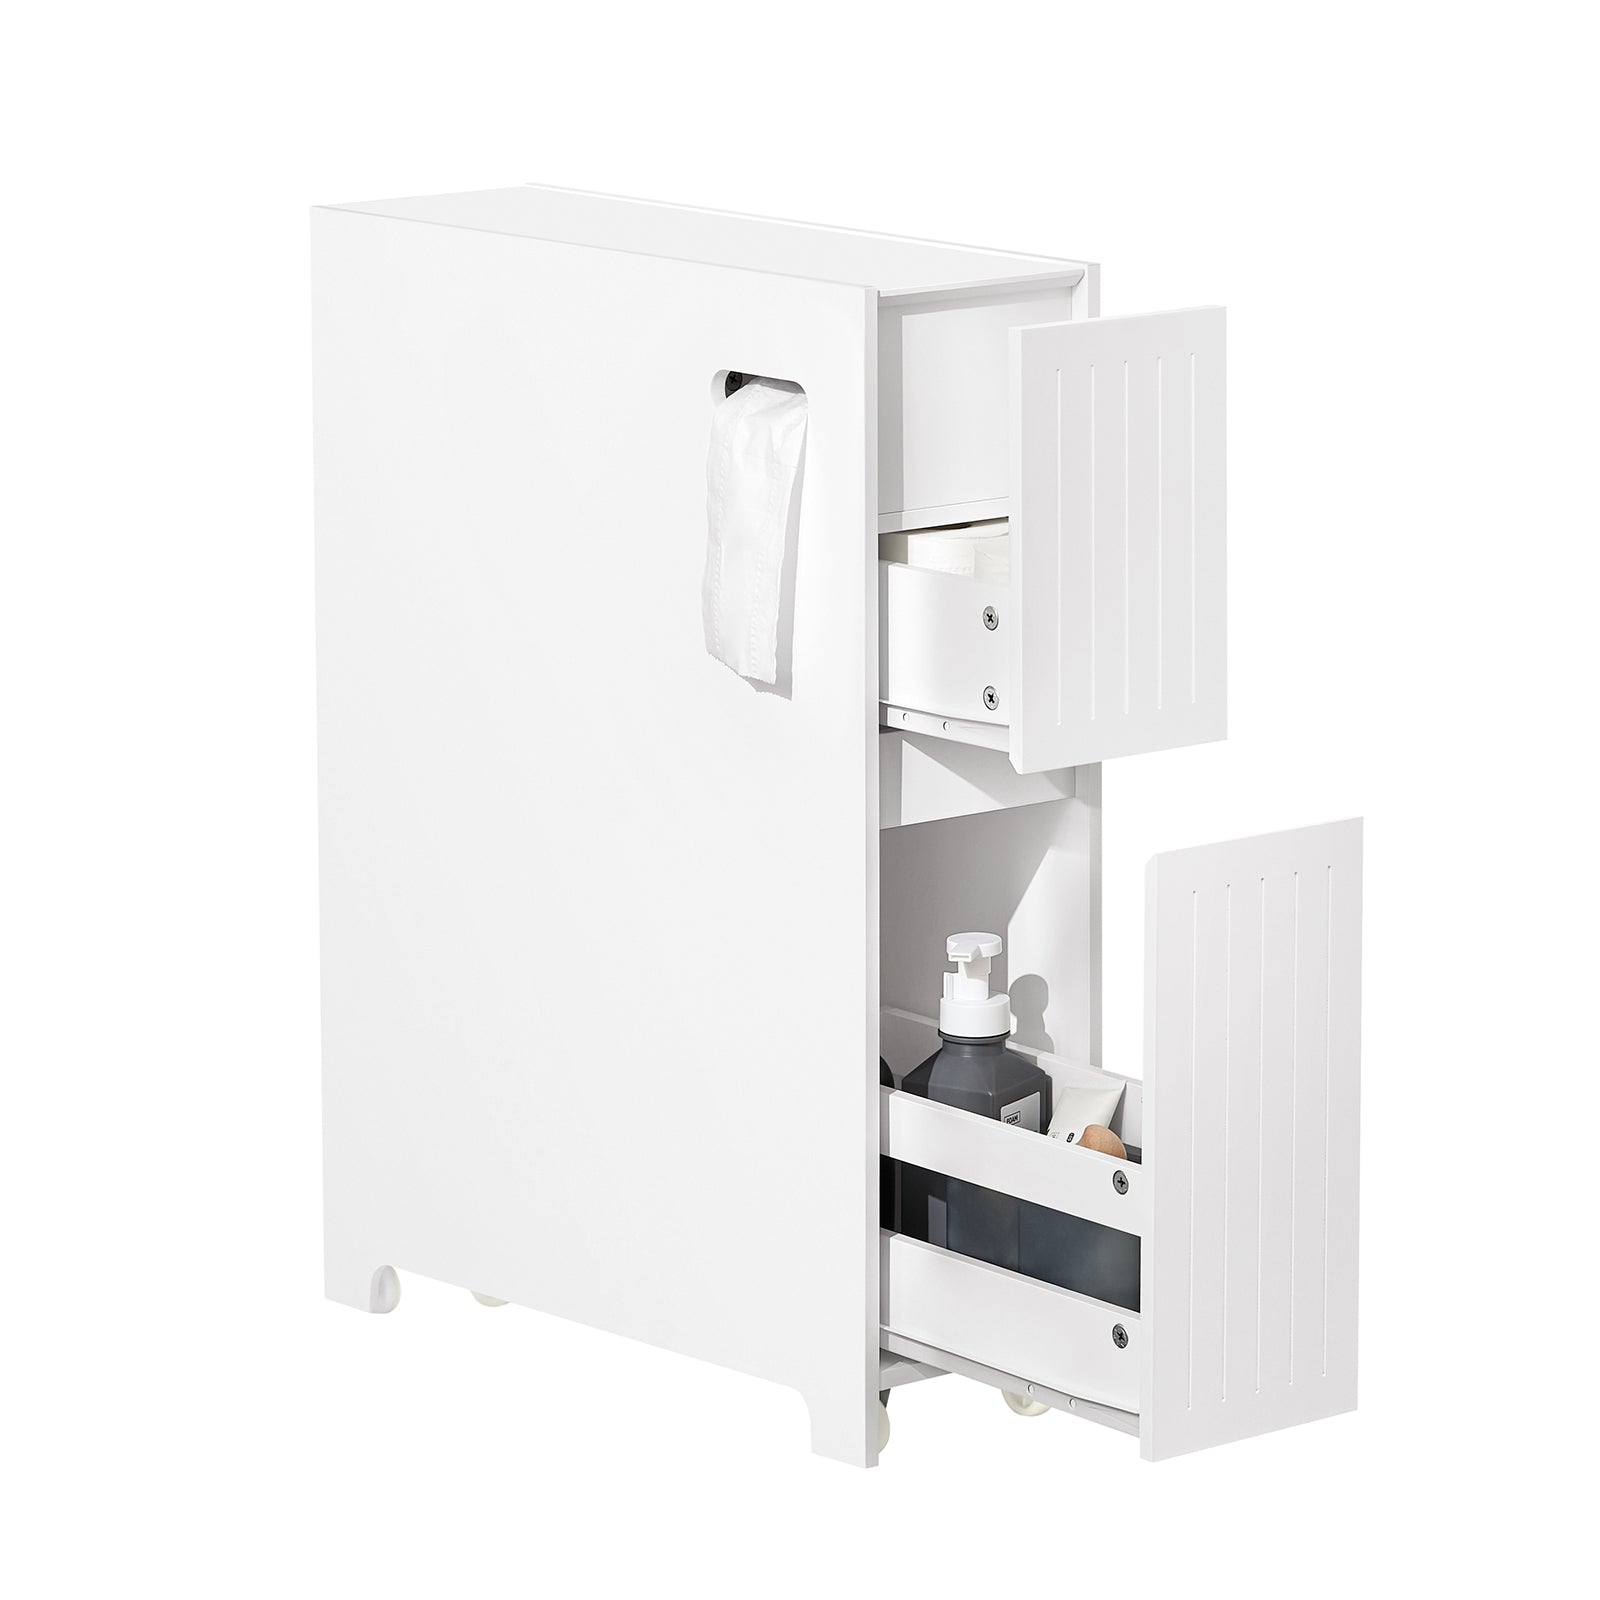 Sobuy bzr53-w support papier toilette armoire toilettes porte